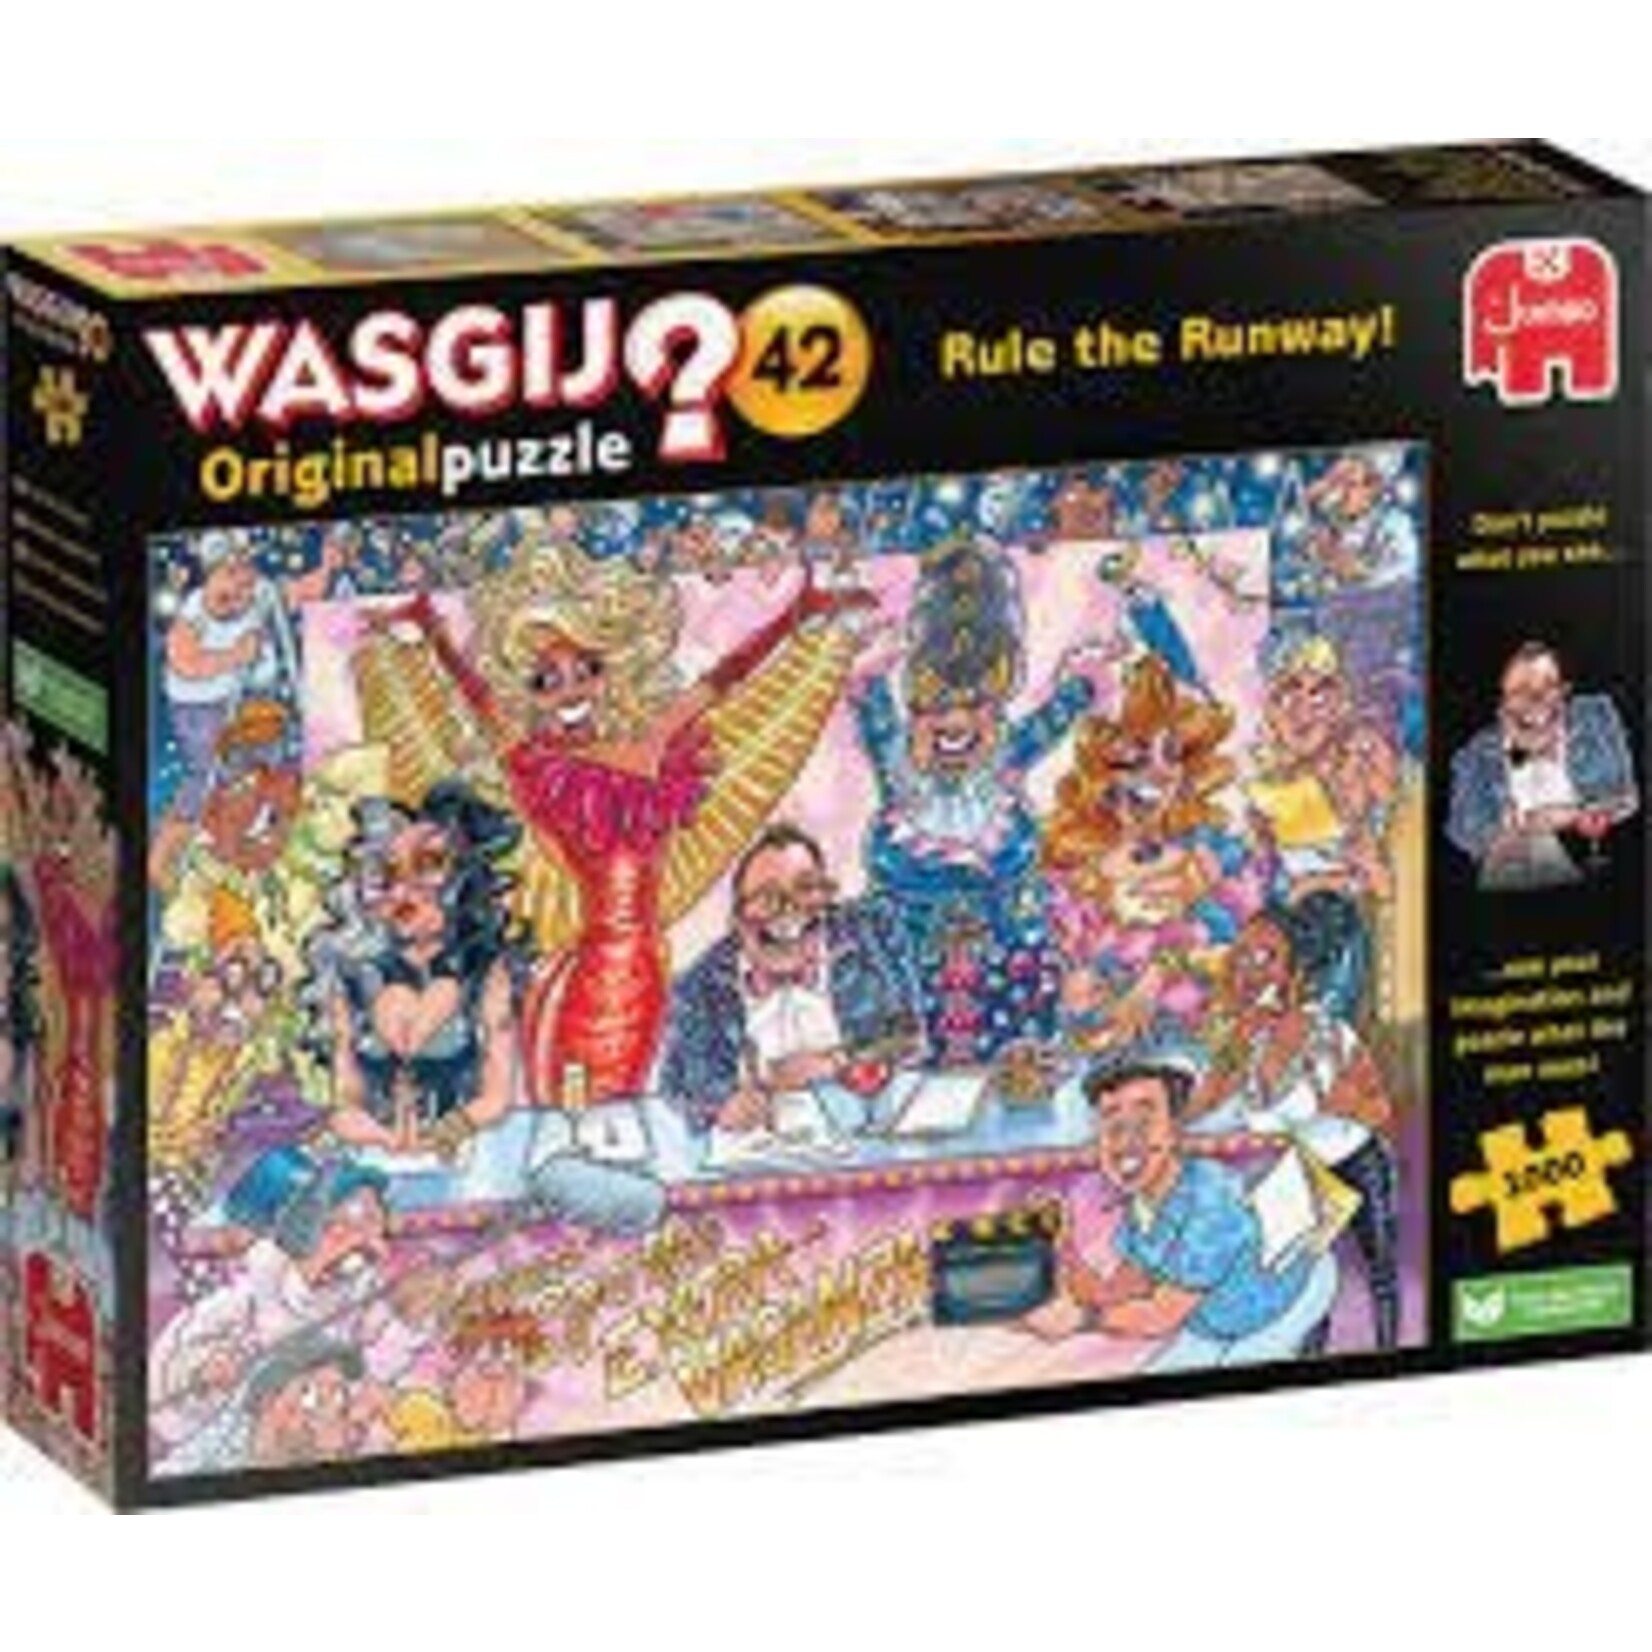 Jumbo Wasgij puzzel Original 42 - Glitter en schitter (1000 stukjes)